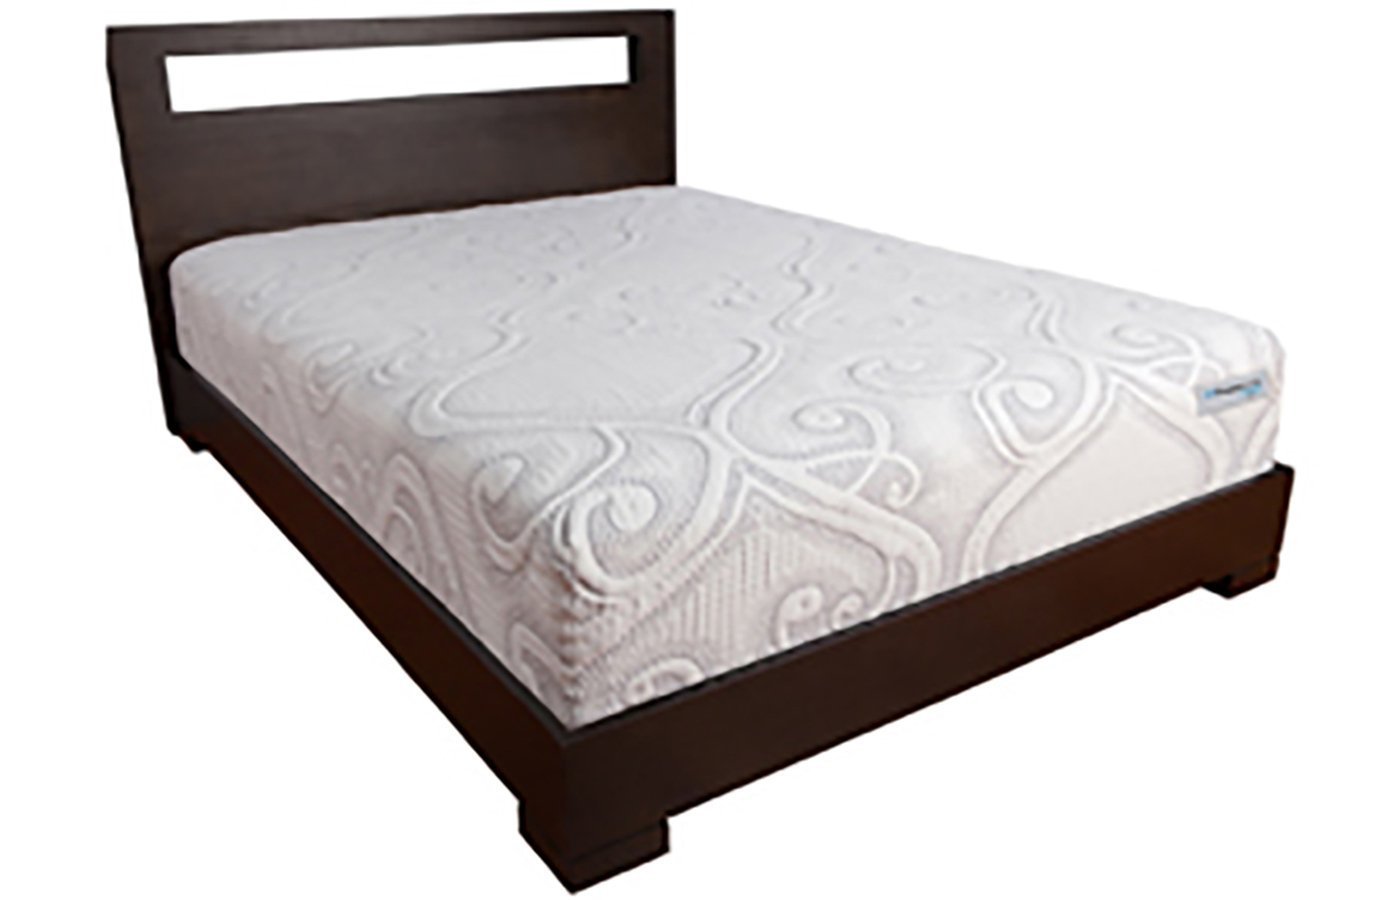 most comfortable hybrid mattress